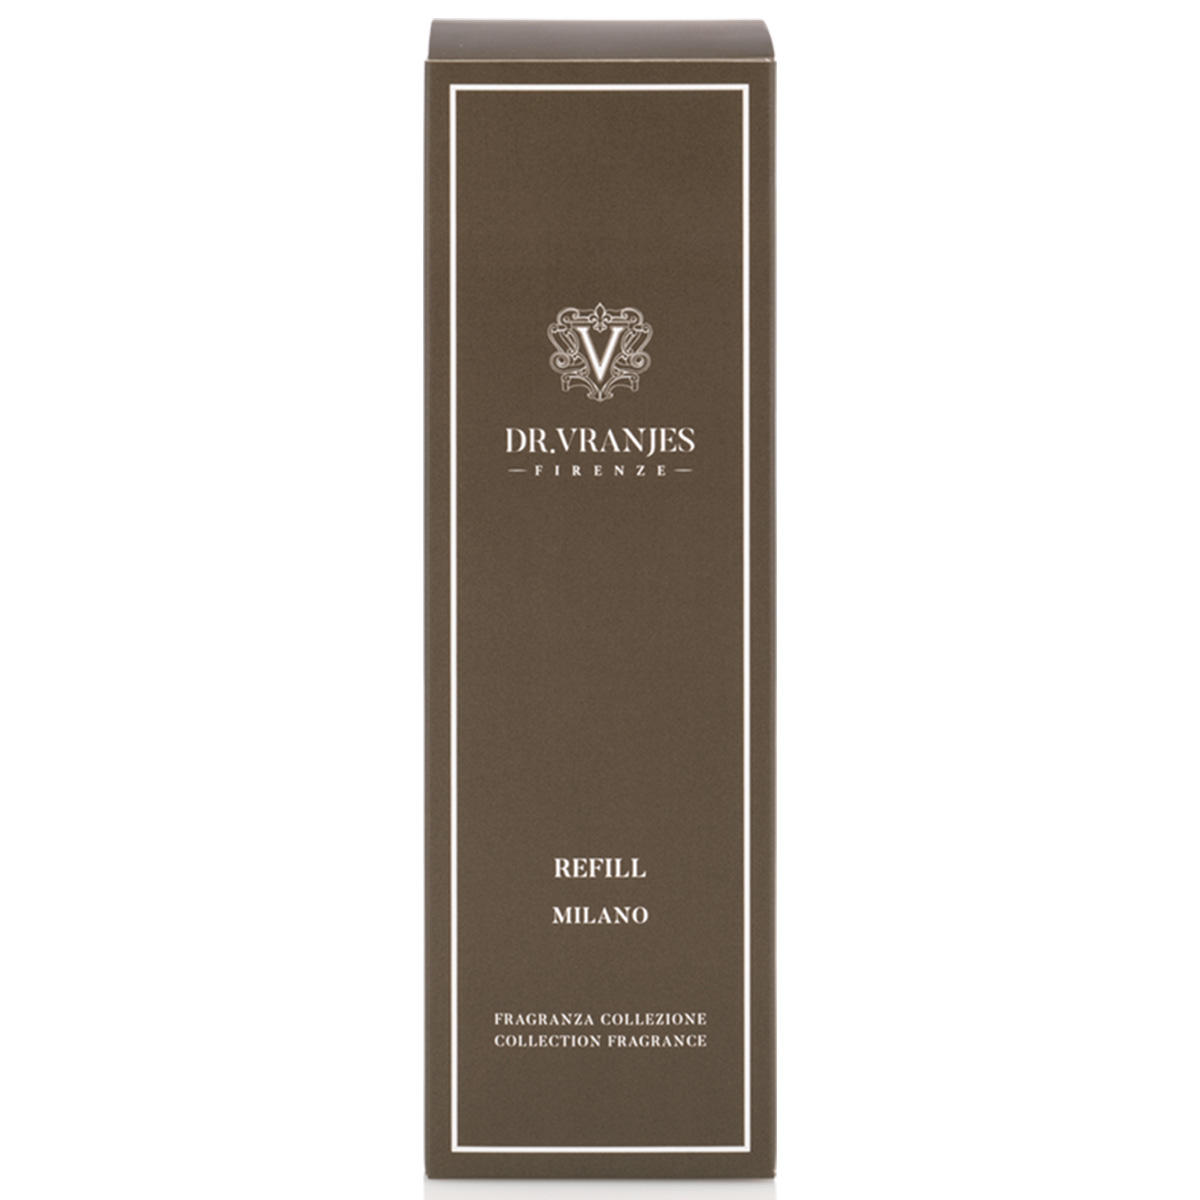 DR. VRANJES FIRENZE Milano Collection Fragrance Refill 500 ml - 2